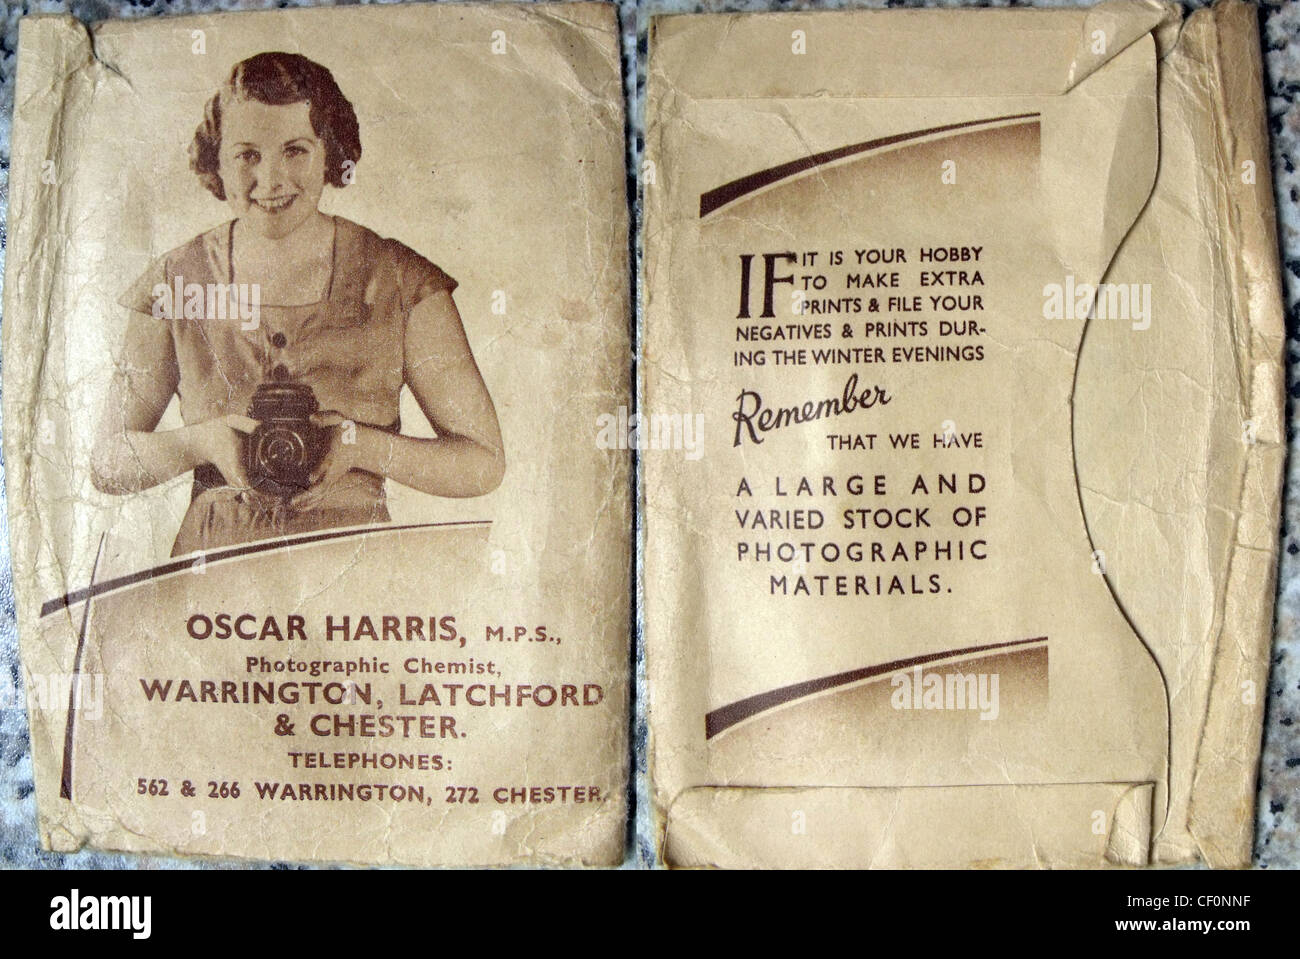 Oscar Harris shop film and negative processing envelope, Chemists shop, Latchford, Warrington, Cheshire, England, UK Stock Photo